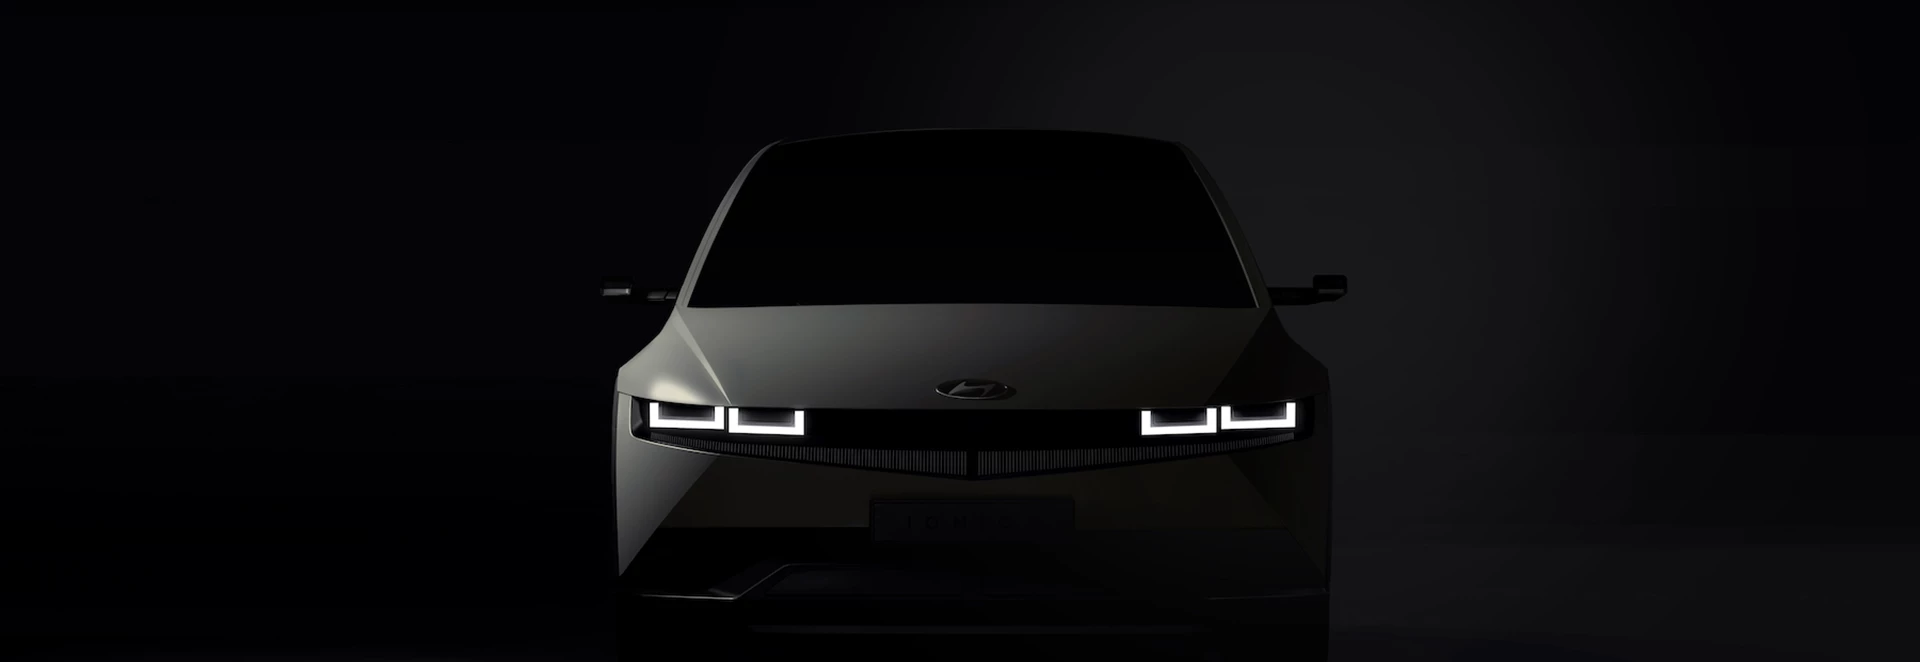 Hyundai teases new model that kickstarts electric ‘IONIQ’ brand 